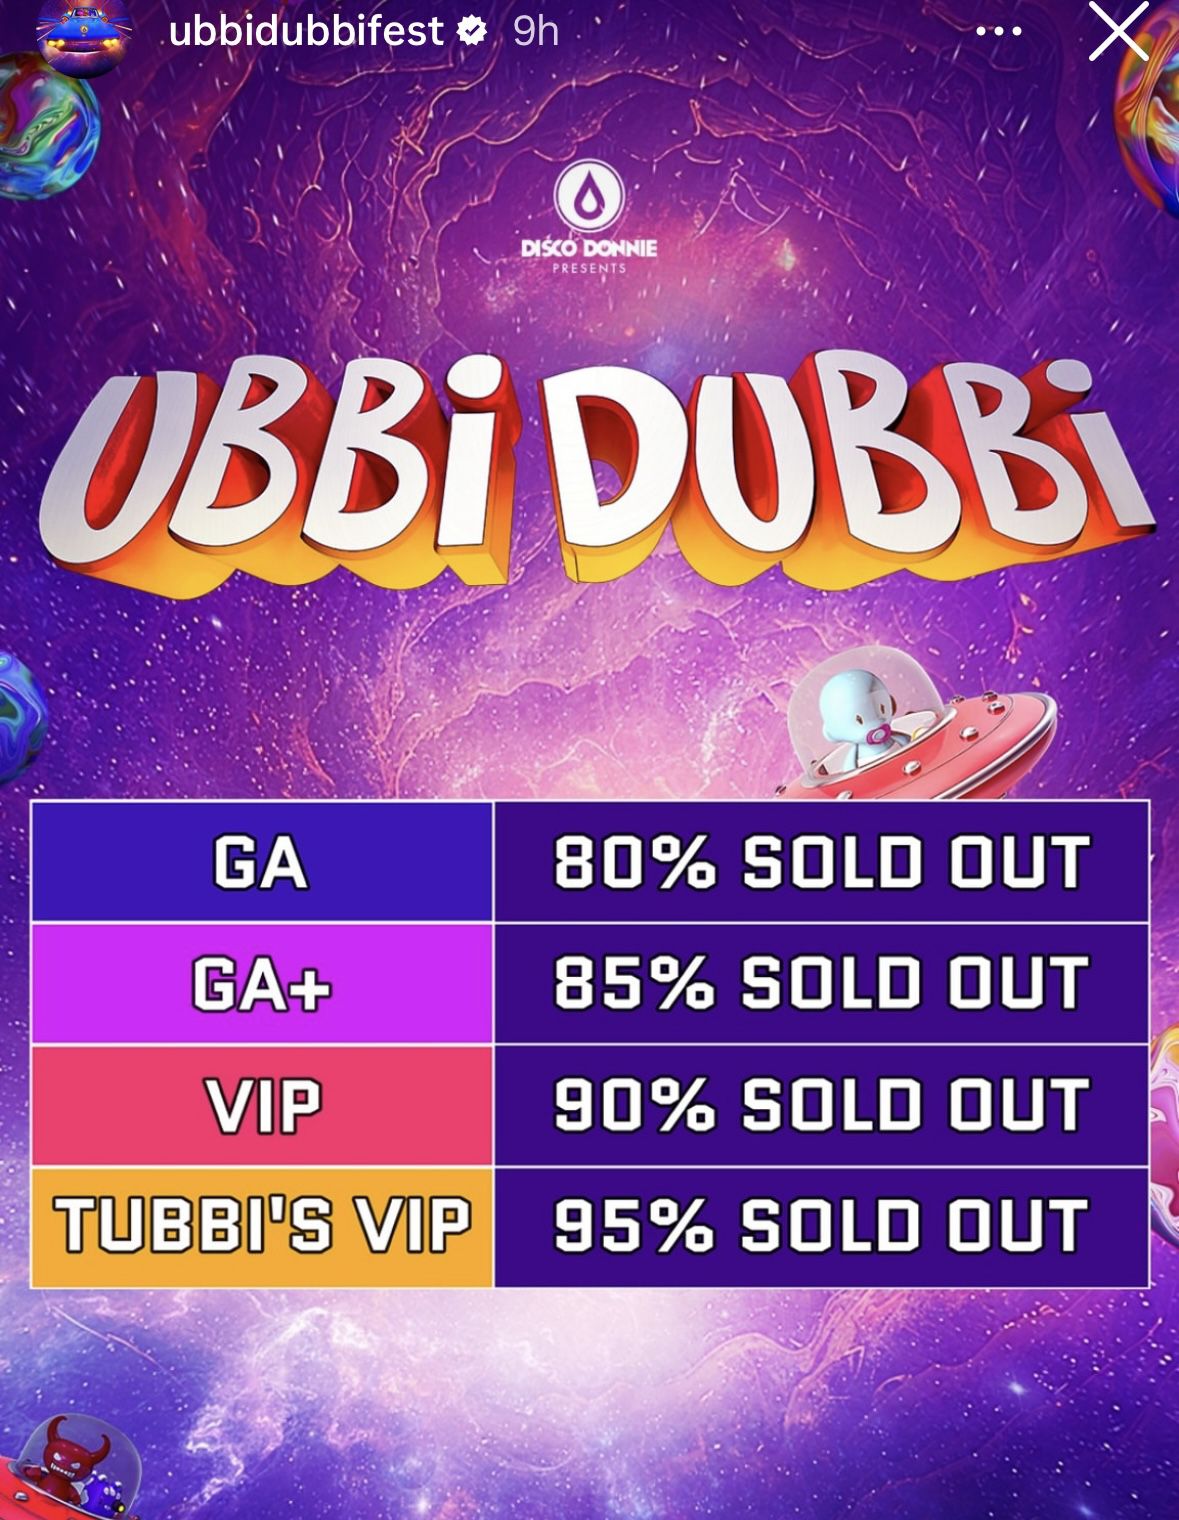 Ubbi Dubbi Tickets 